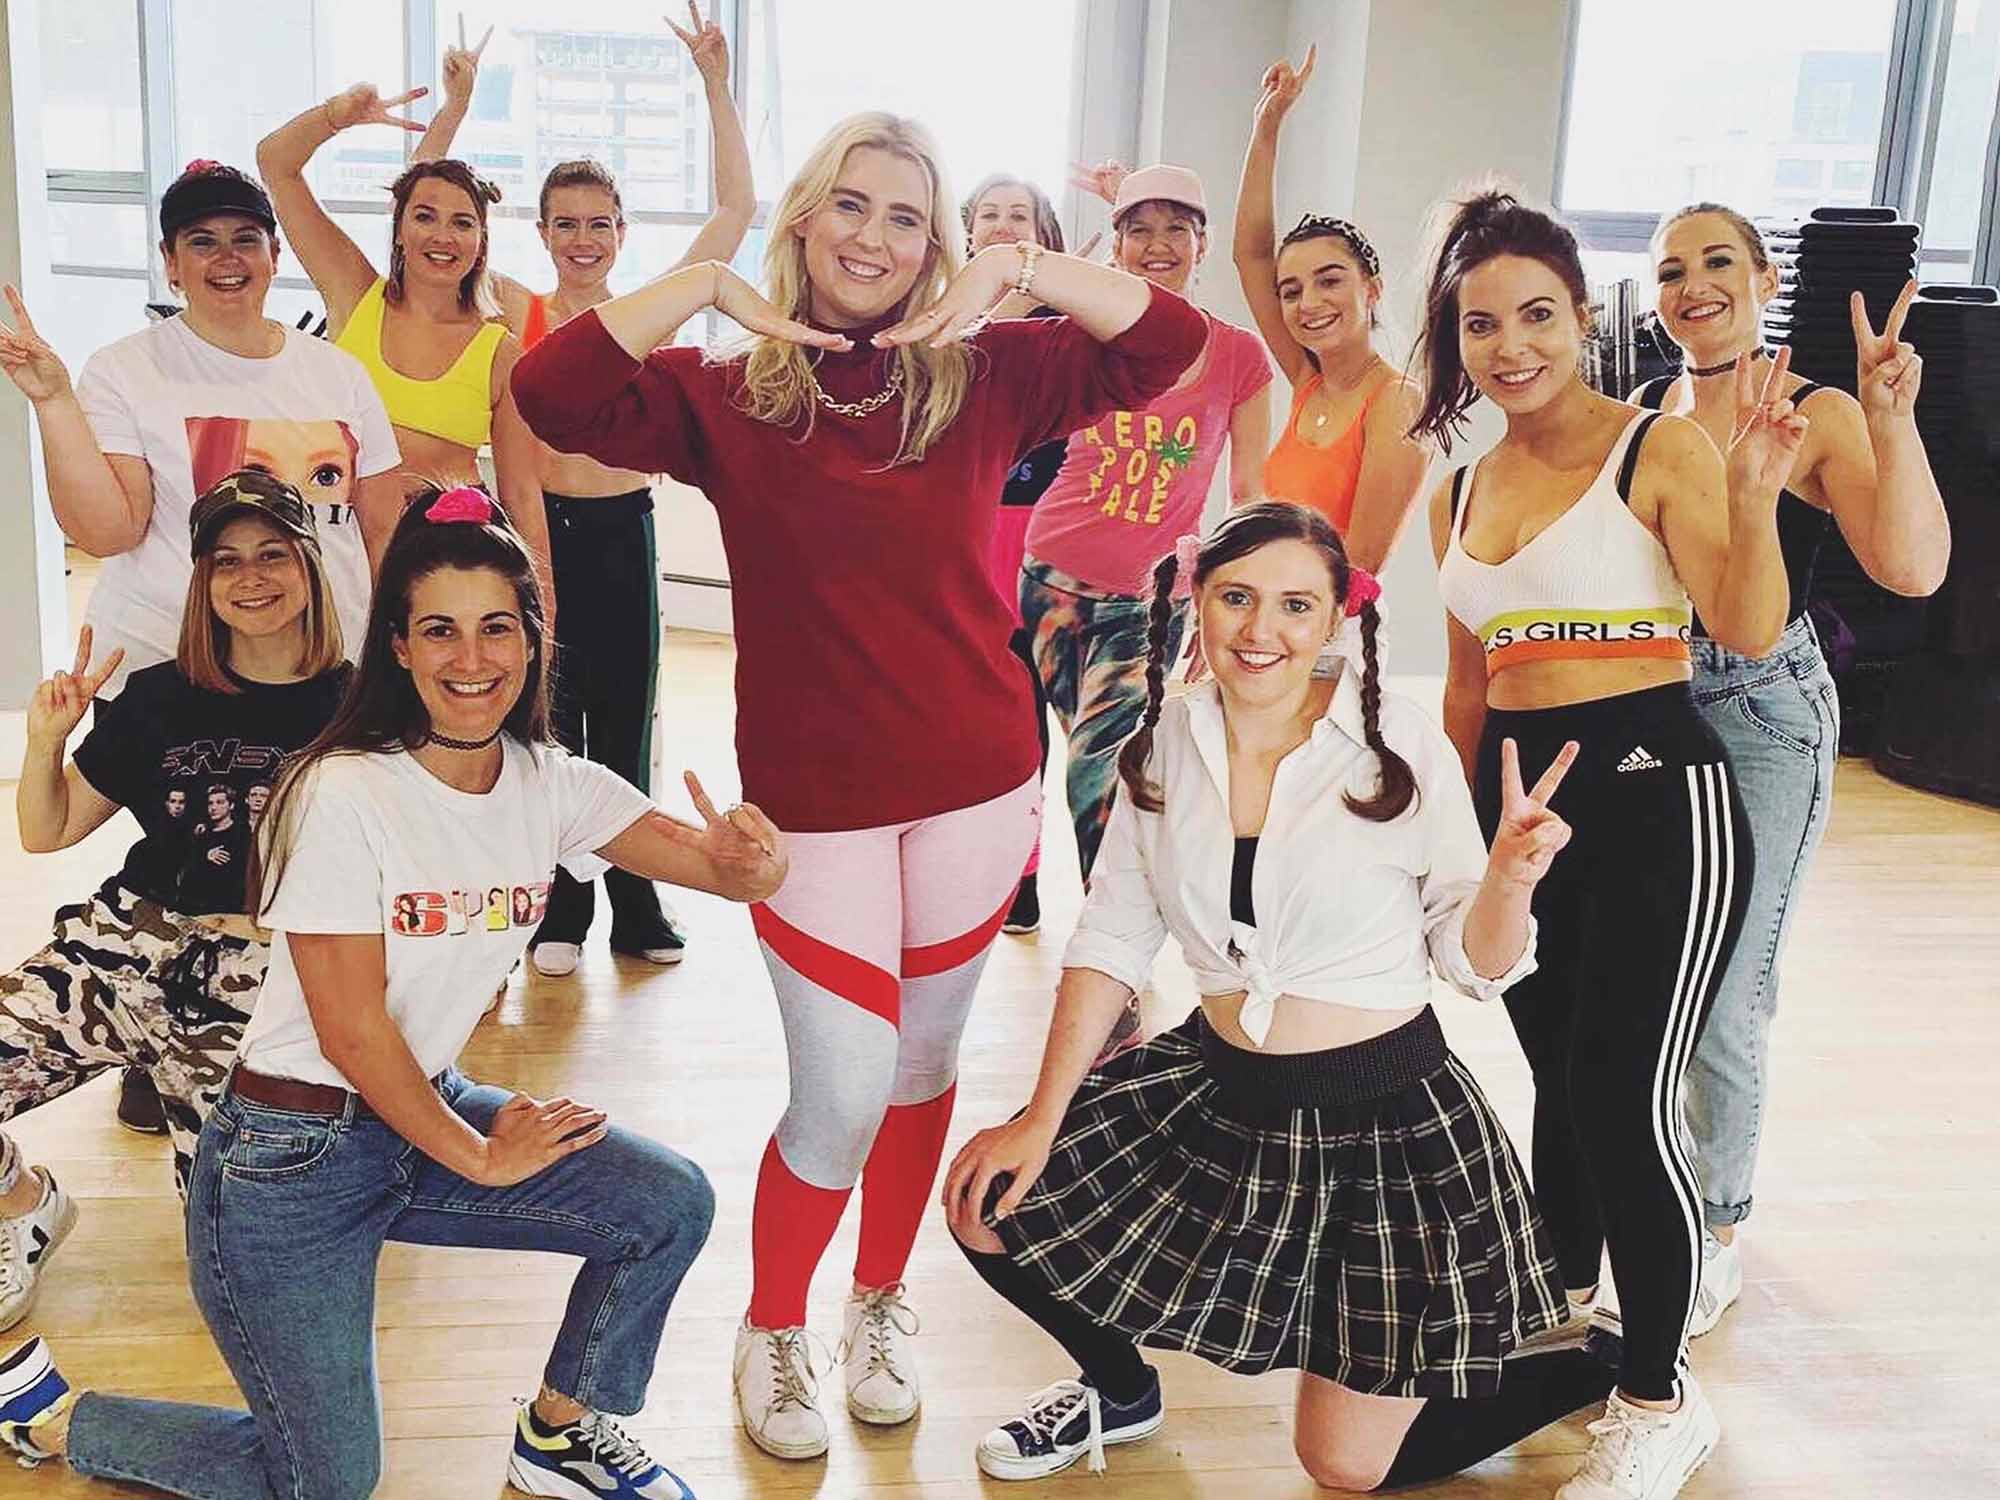 Cheap Hen Do Ideas in London - Spice Girls Dance Class